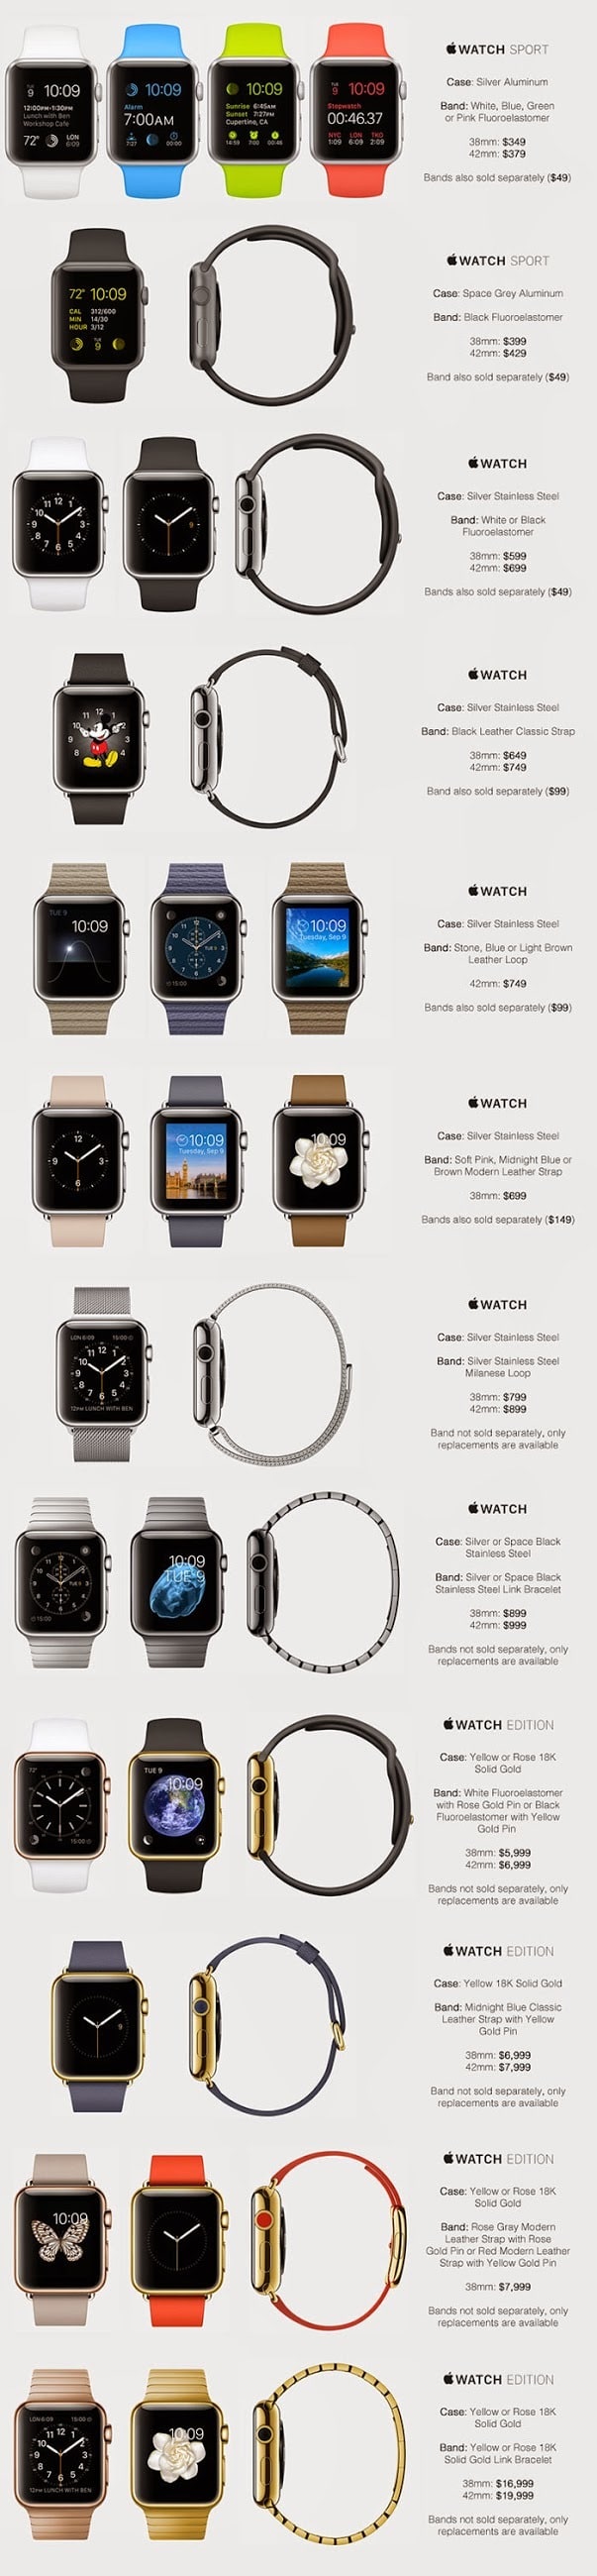 Apple Watch price